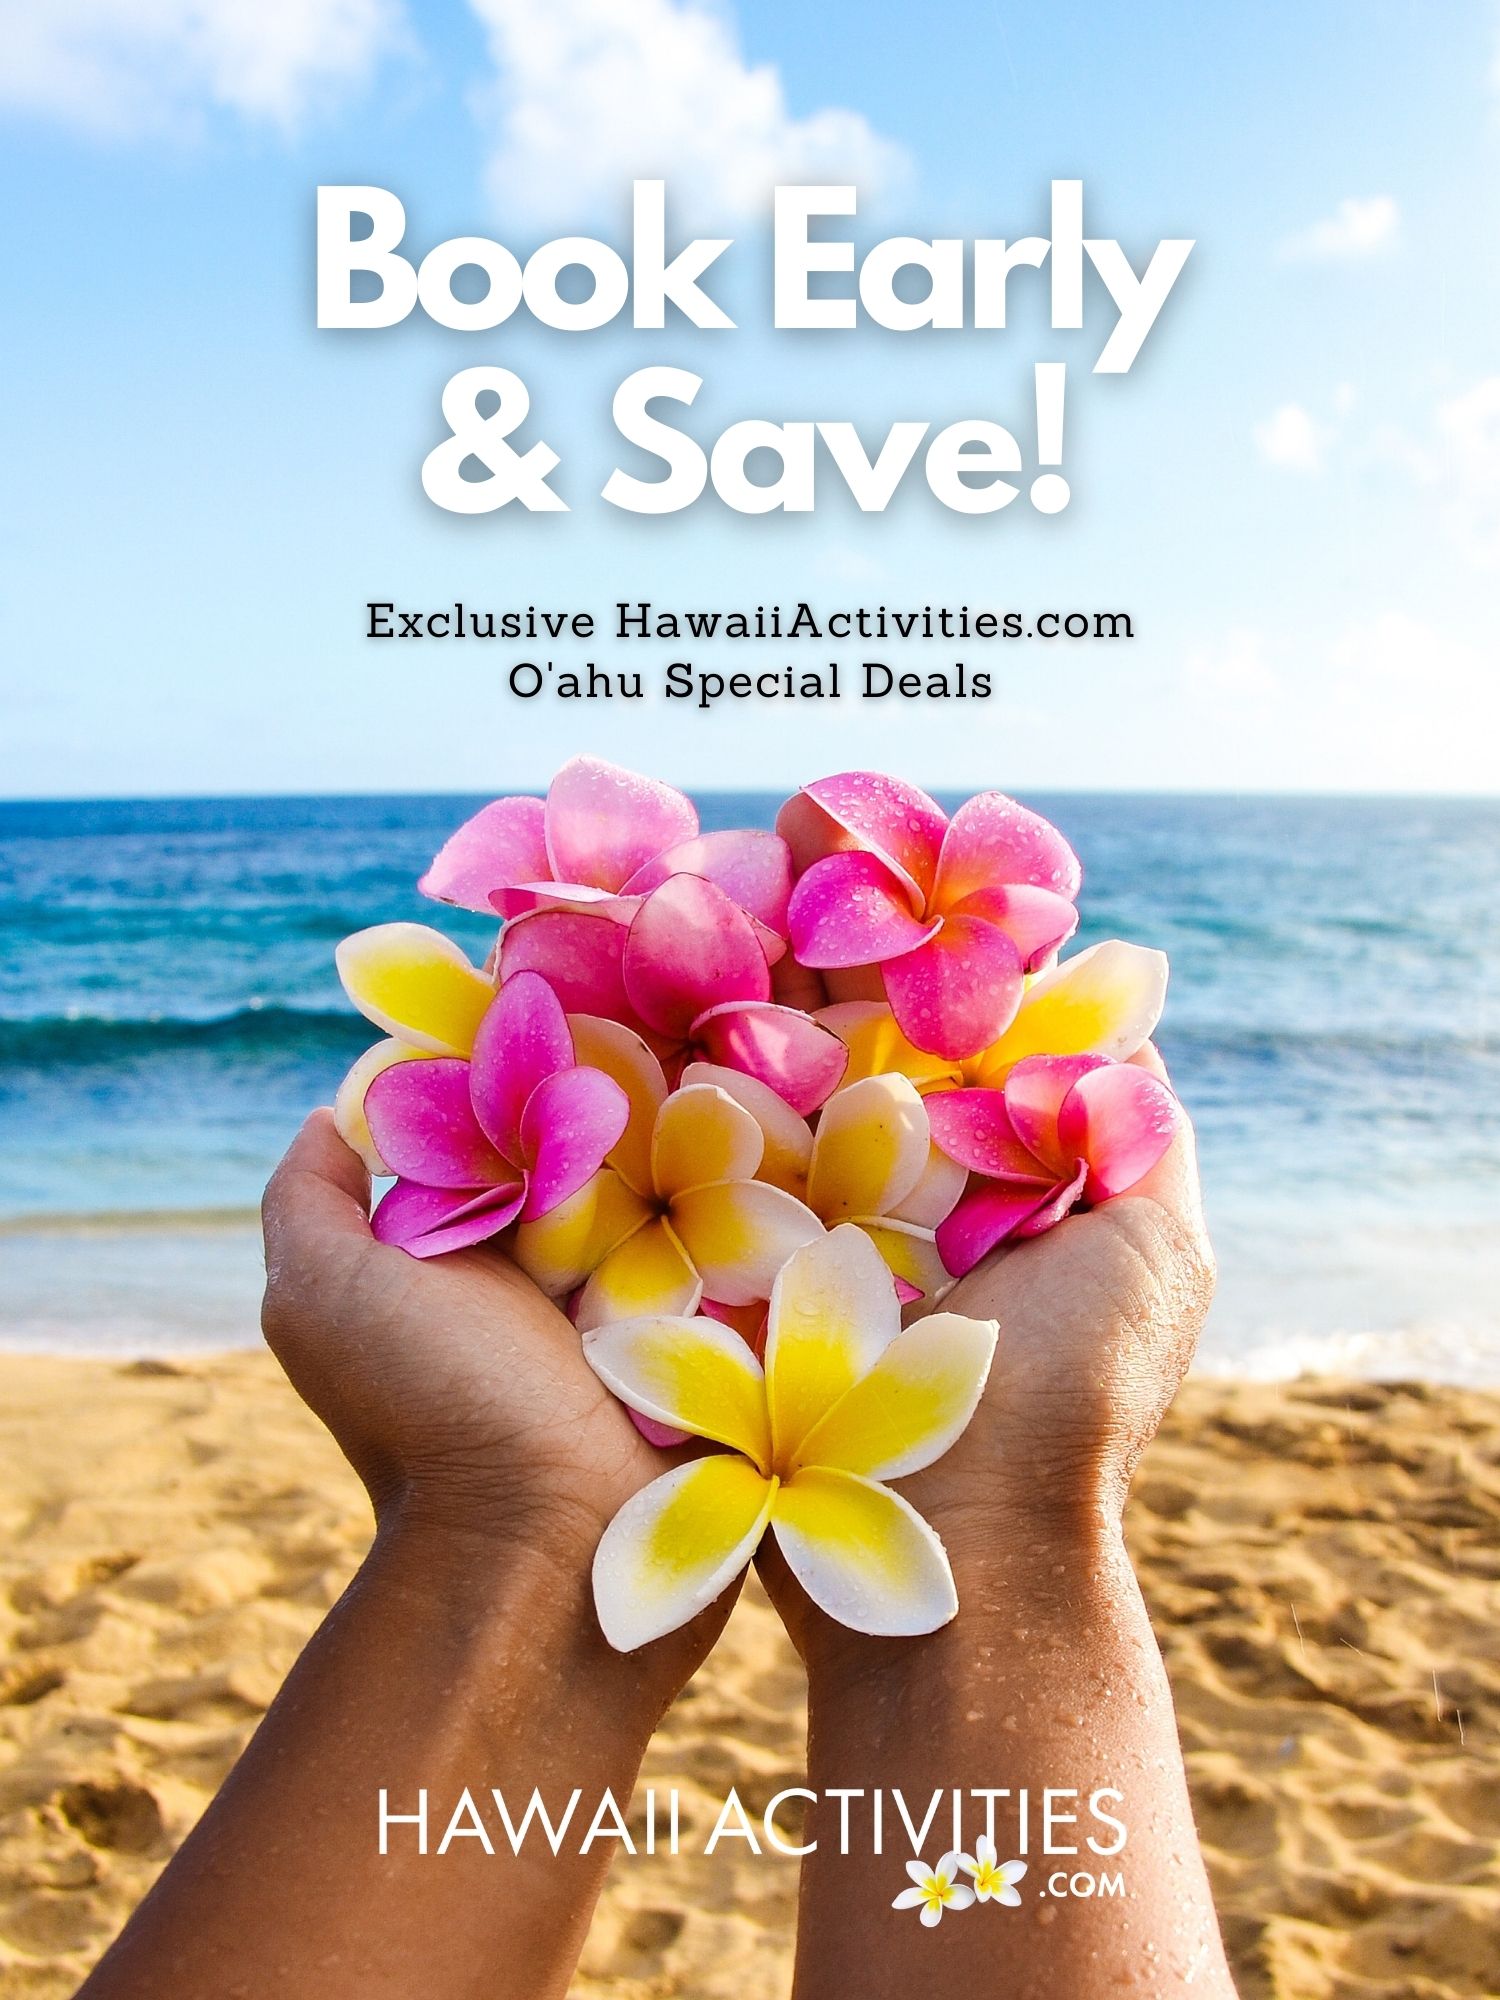 Book Early and Save at HawaiiActivities.com